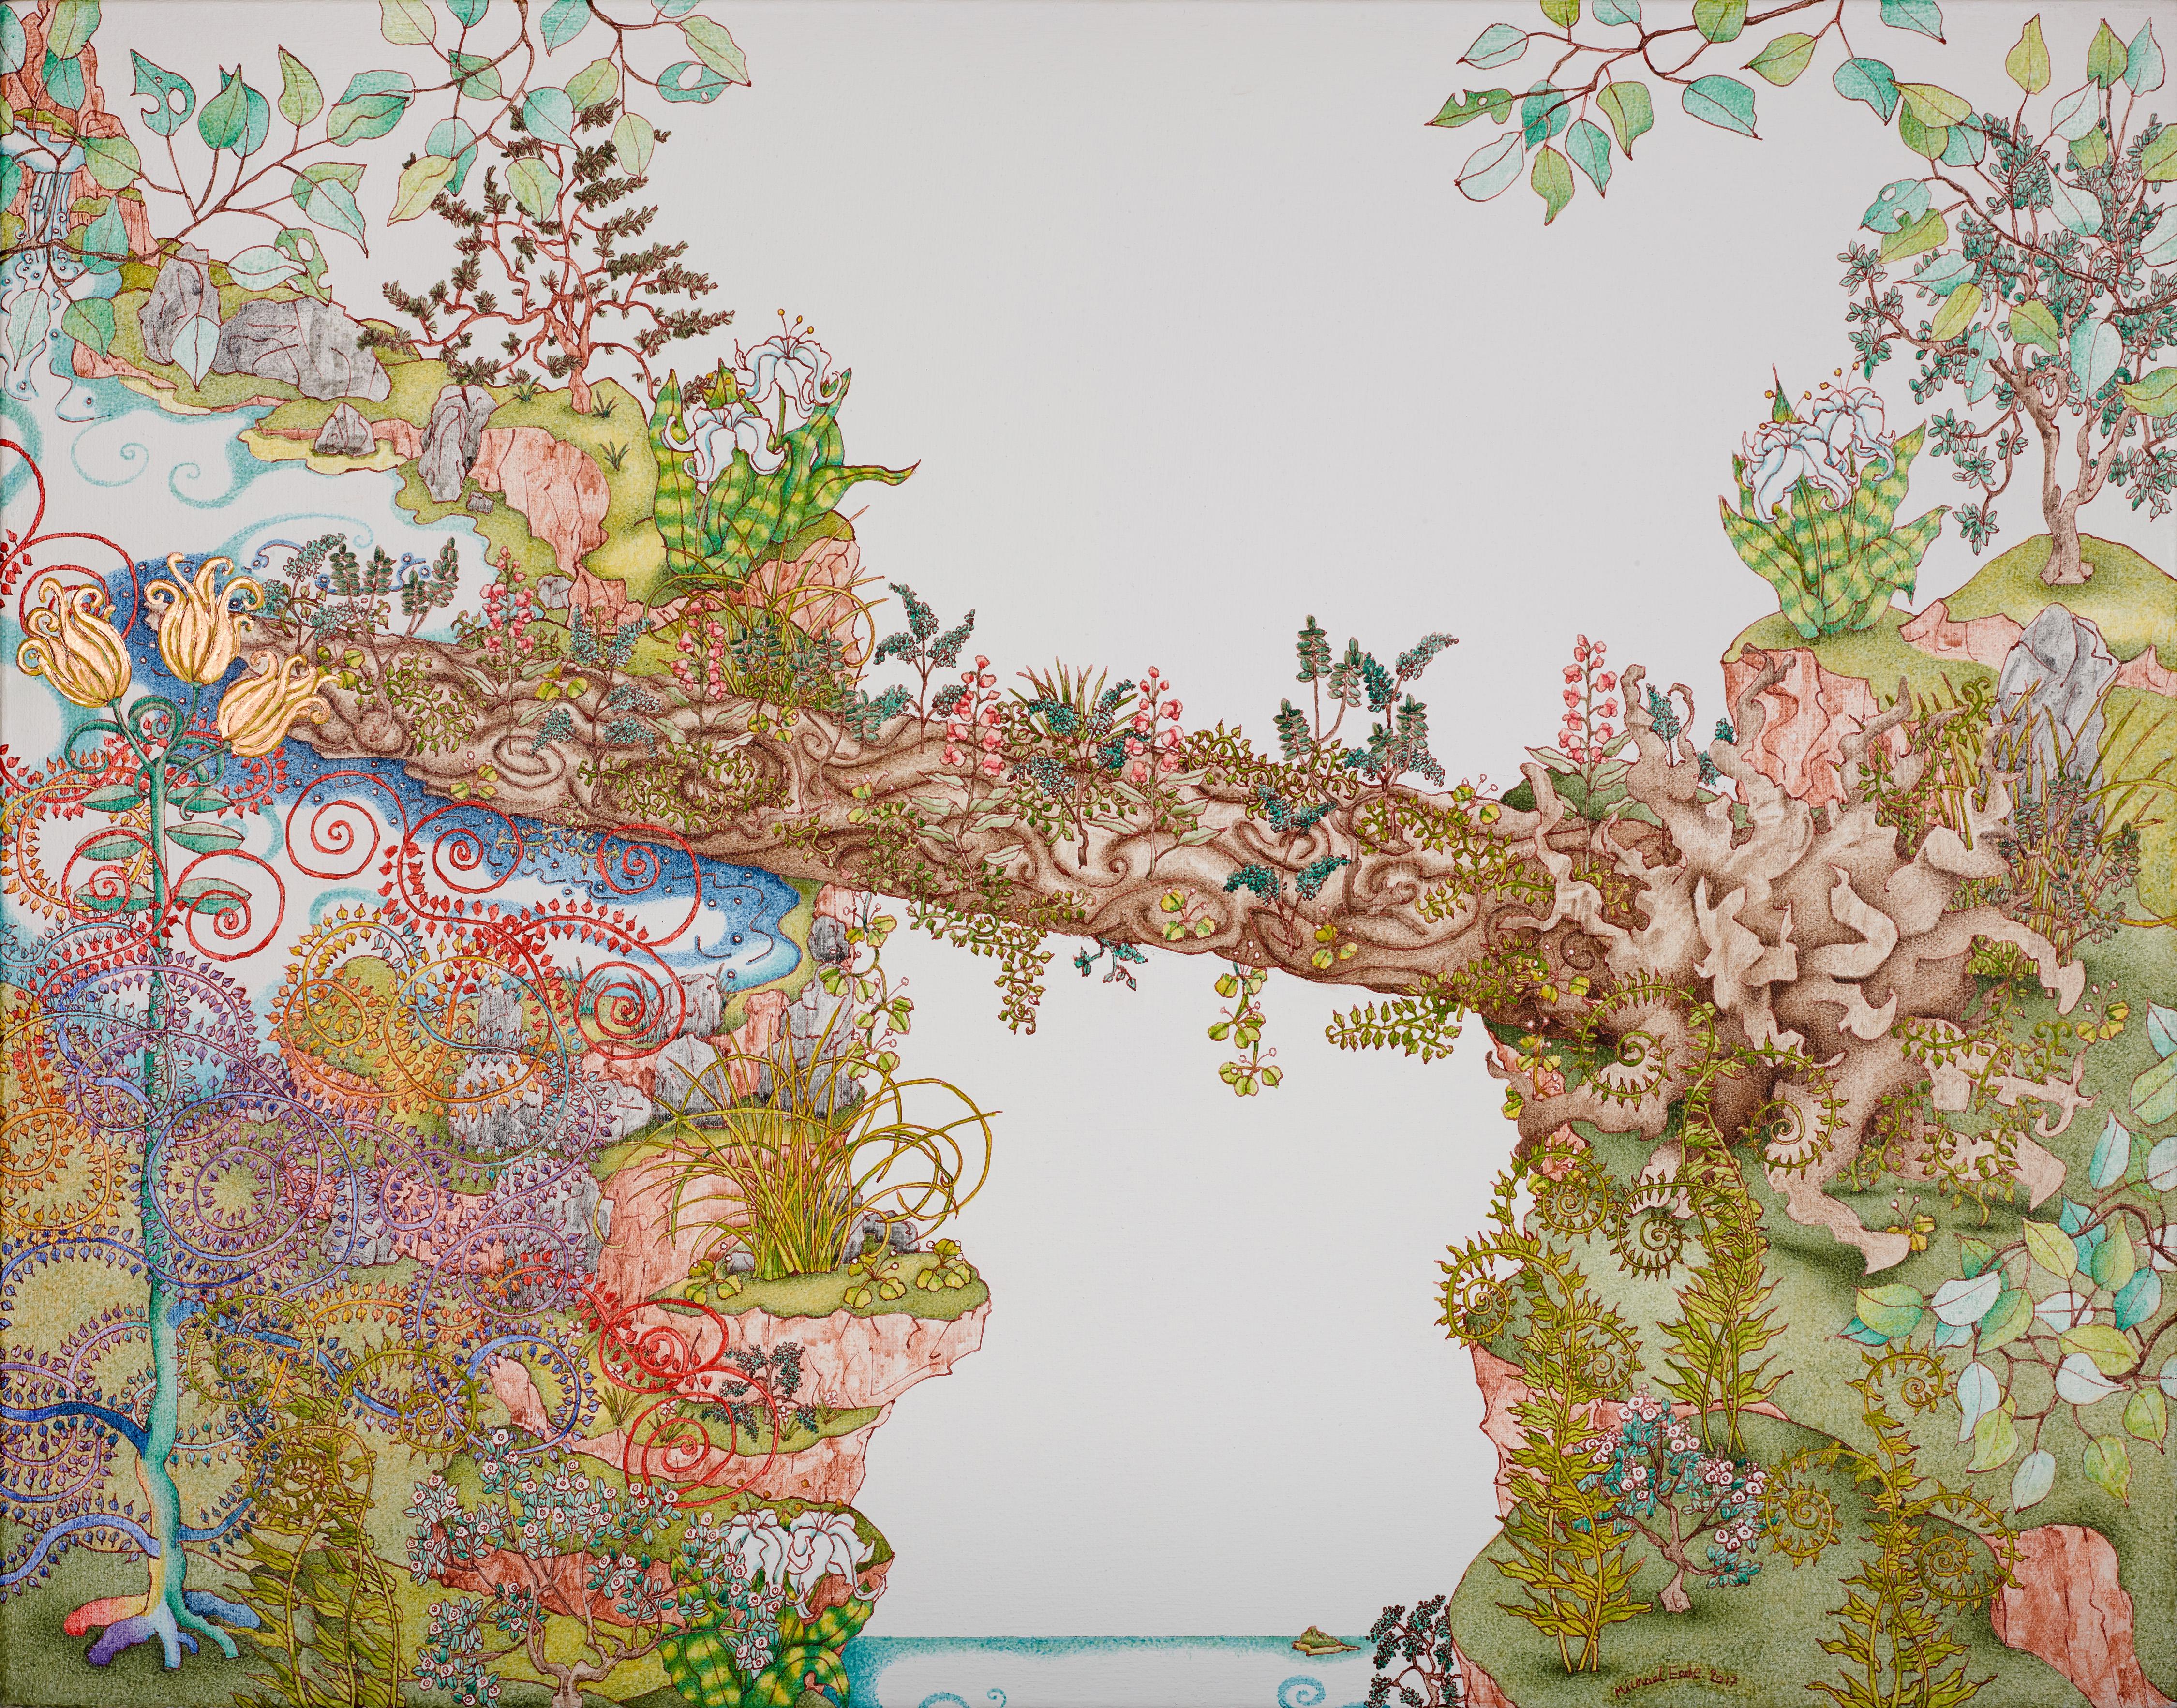 Michael Eade Landscape Art - Nurse Log Bridge, colorful forest scene, mixed media on canvas